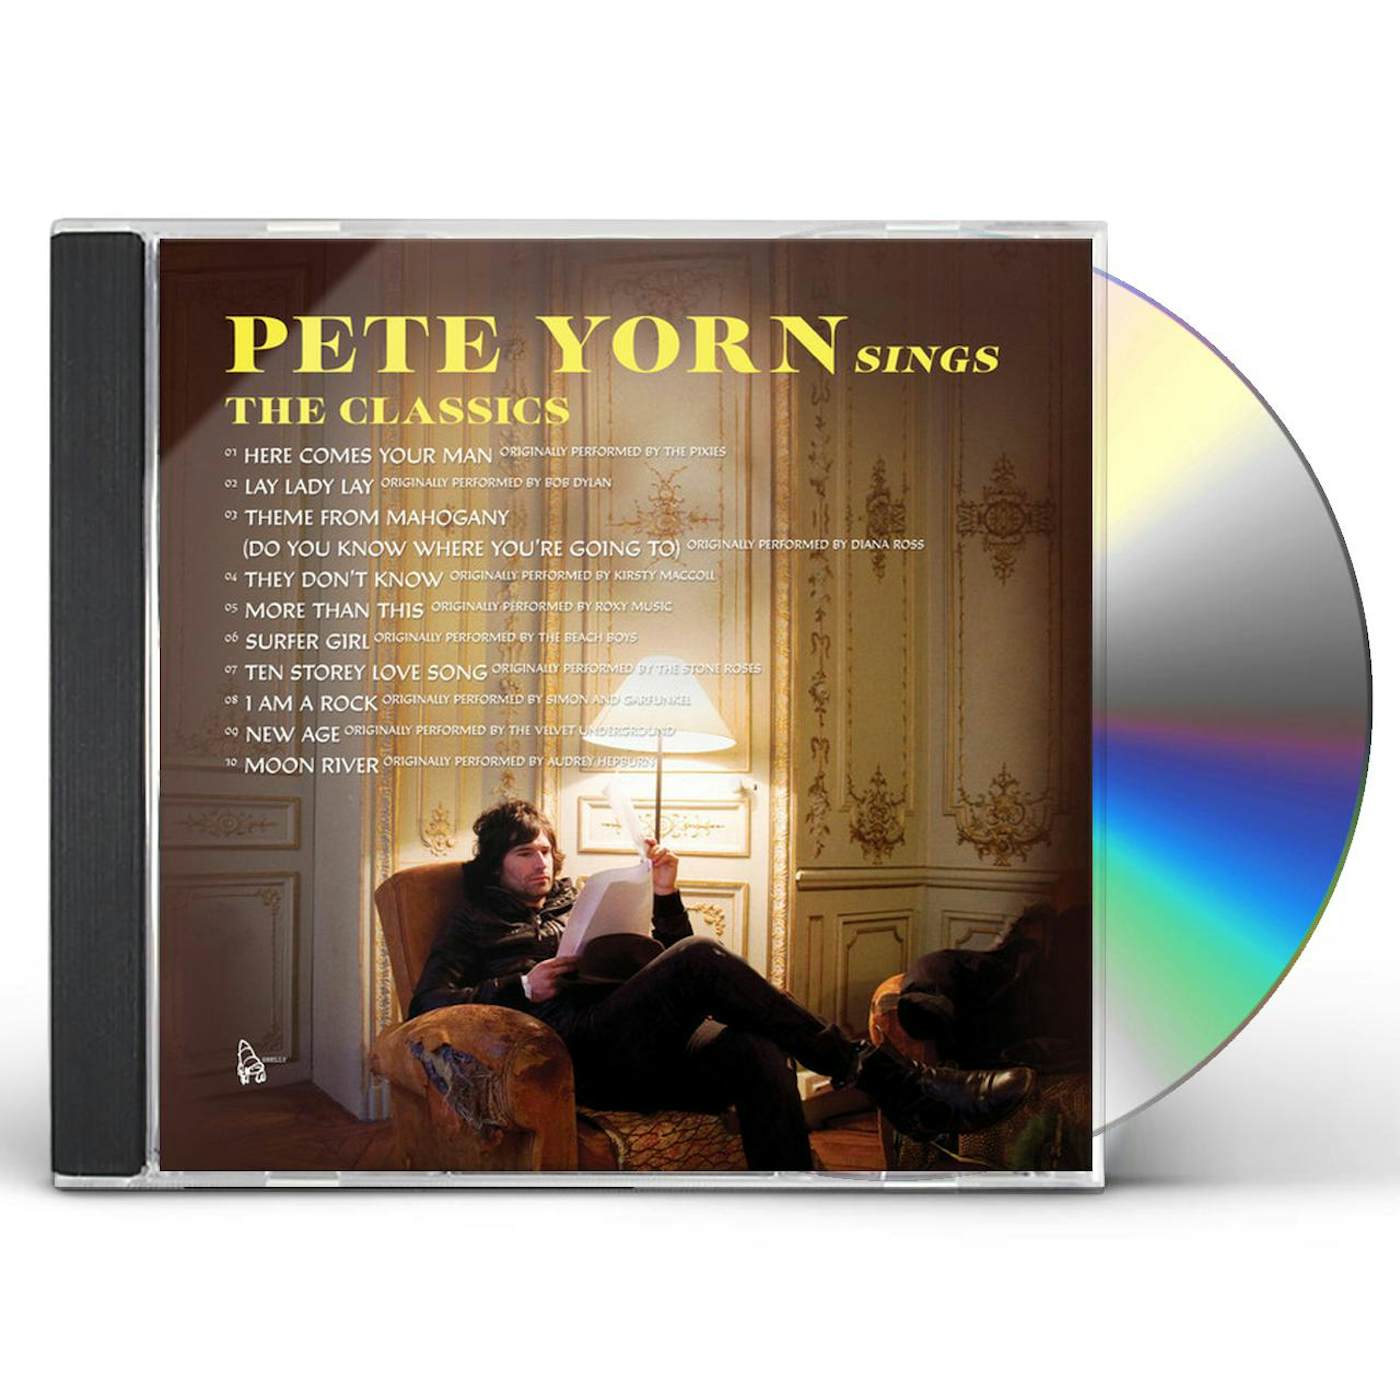 PETE YORN SINGS THE CLASSICS CD